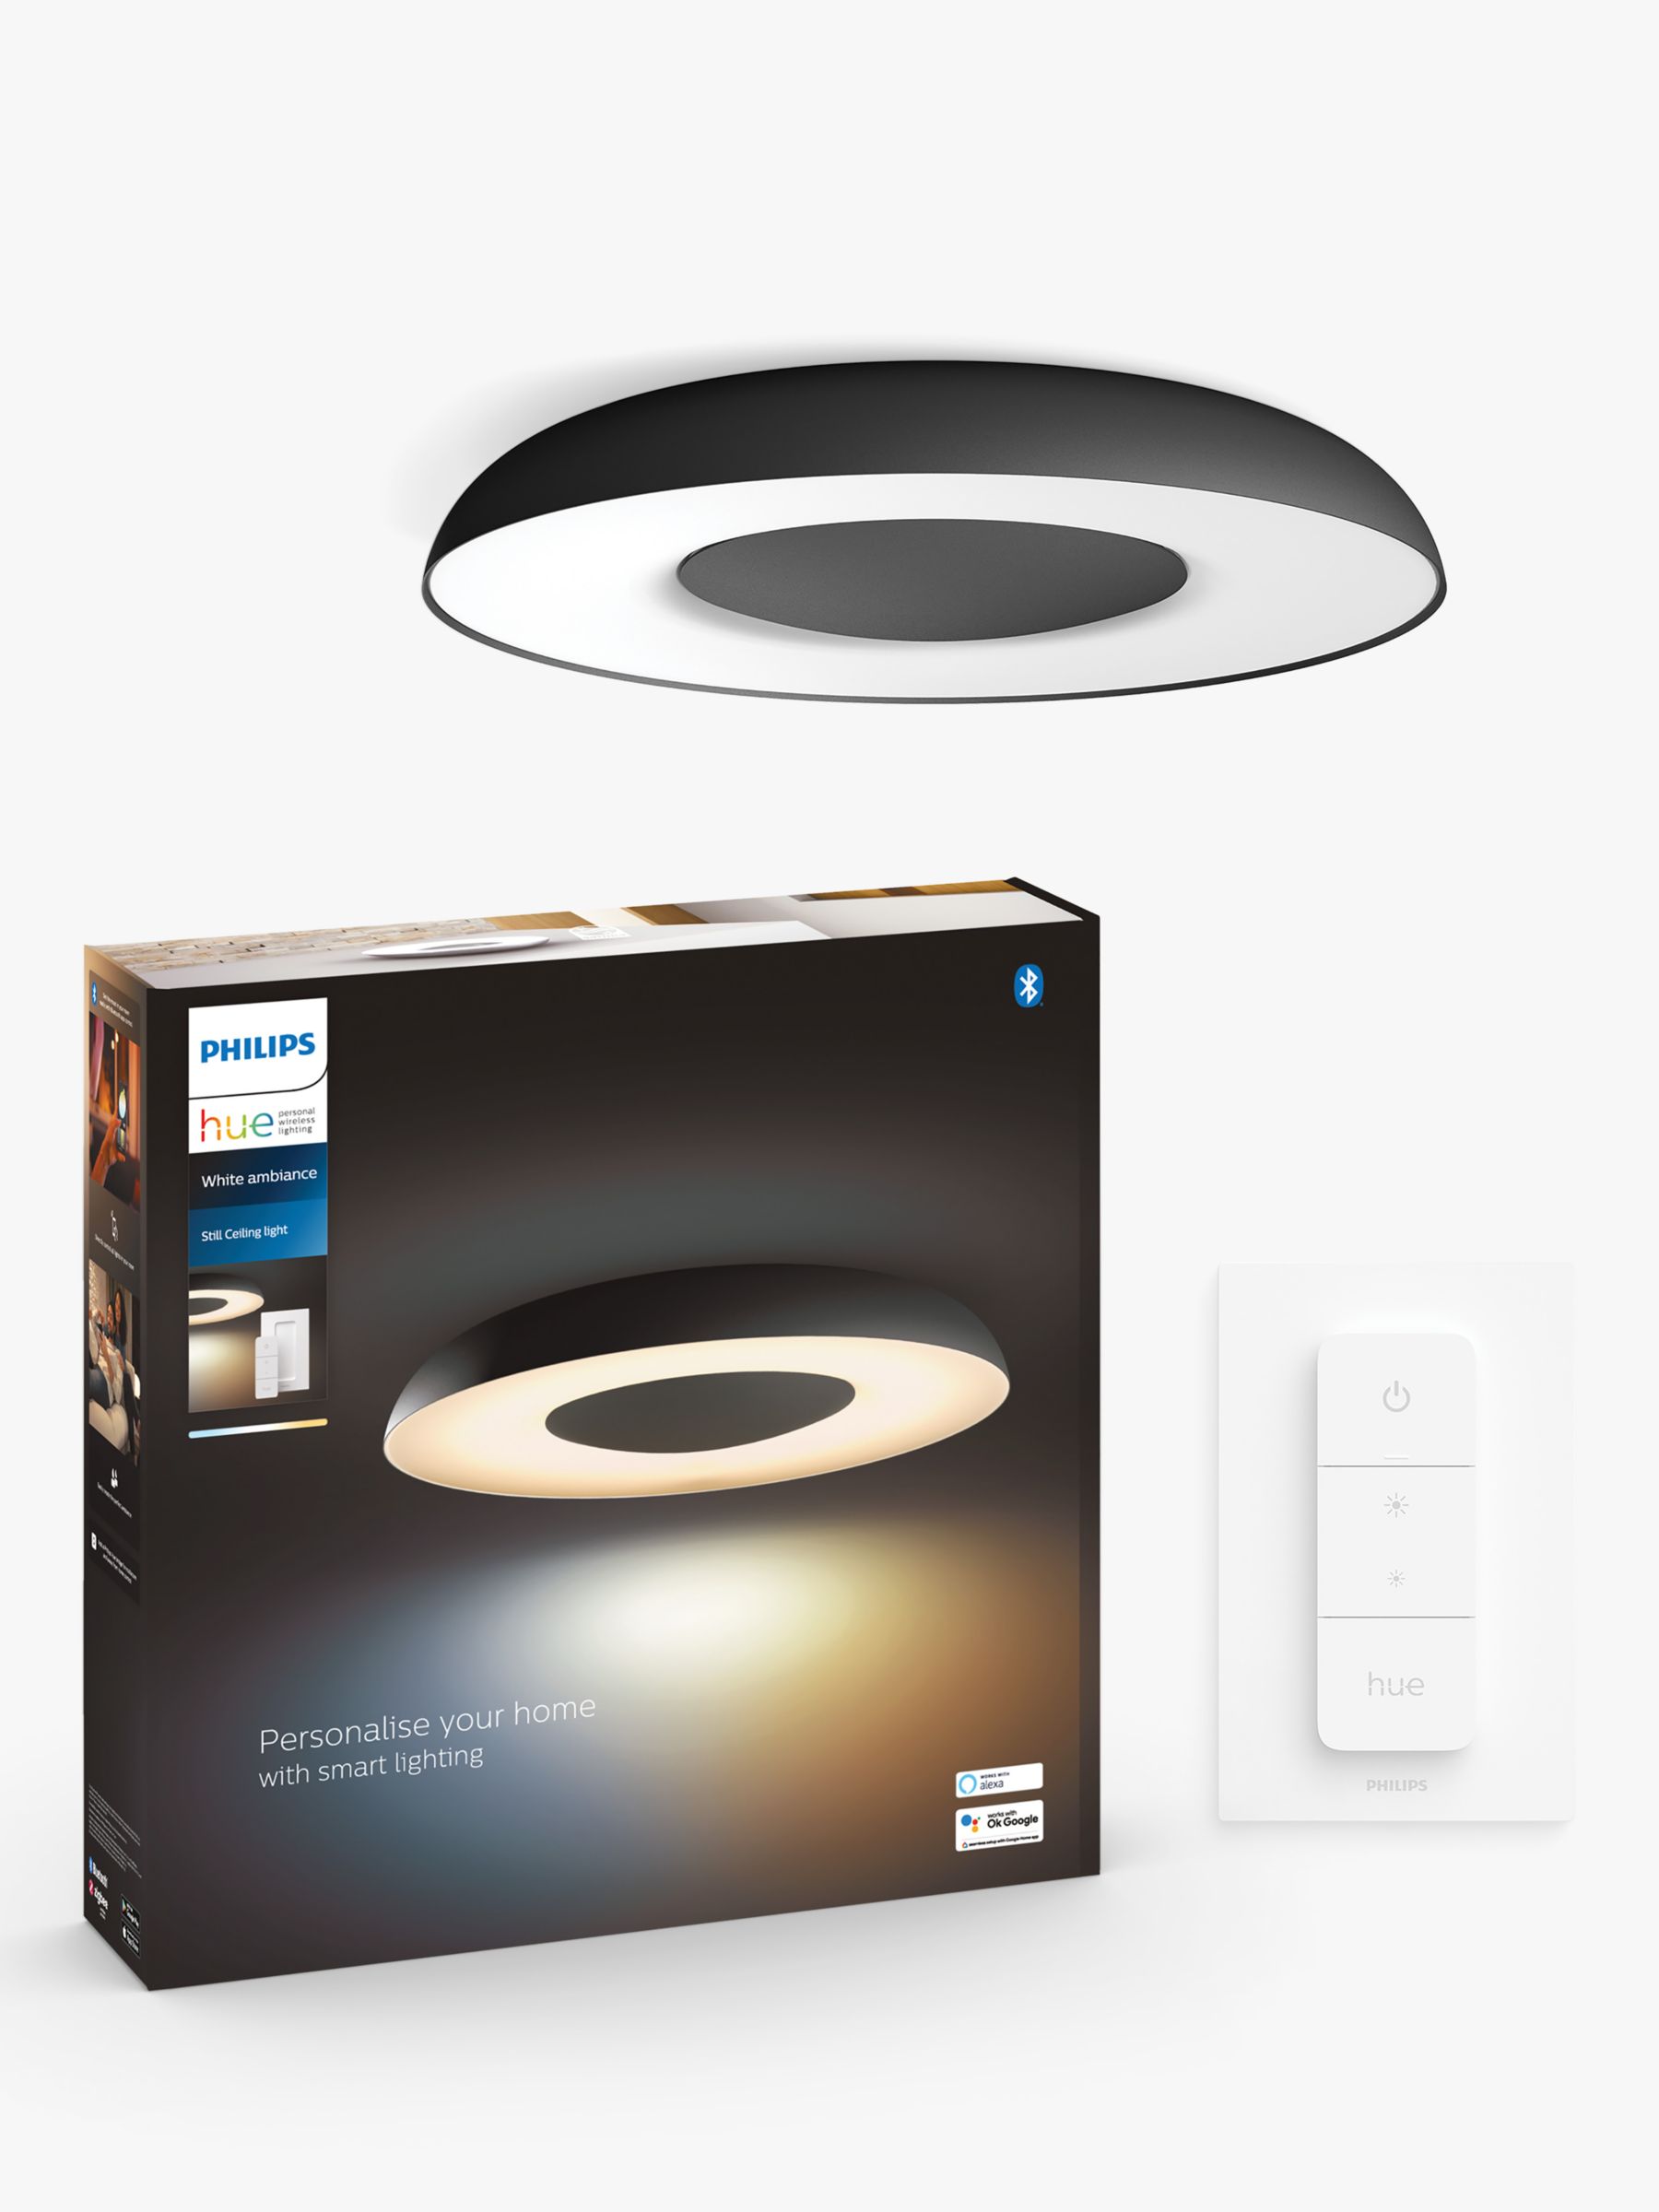 Philips Still LED Smart Semi Flush Ceiling Light Bluetooth and Dimmer Switch, Black